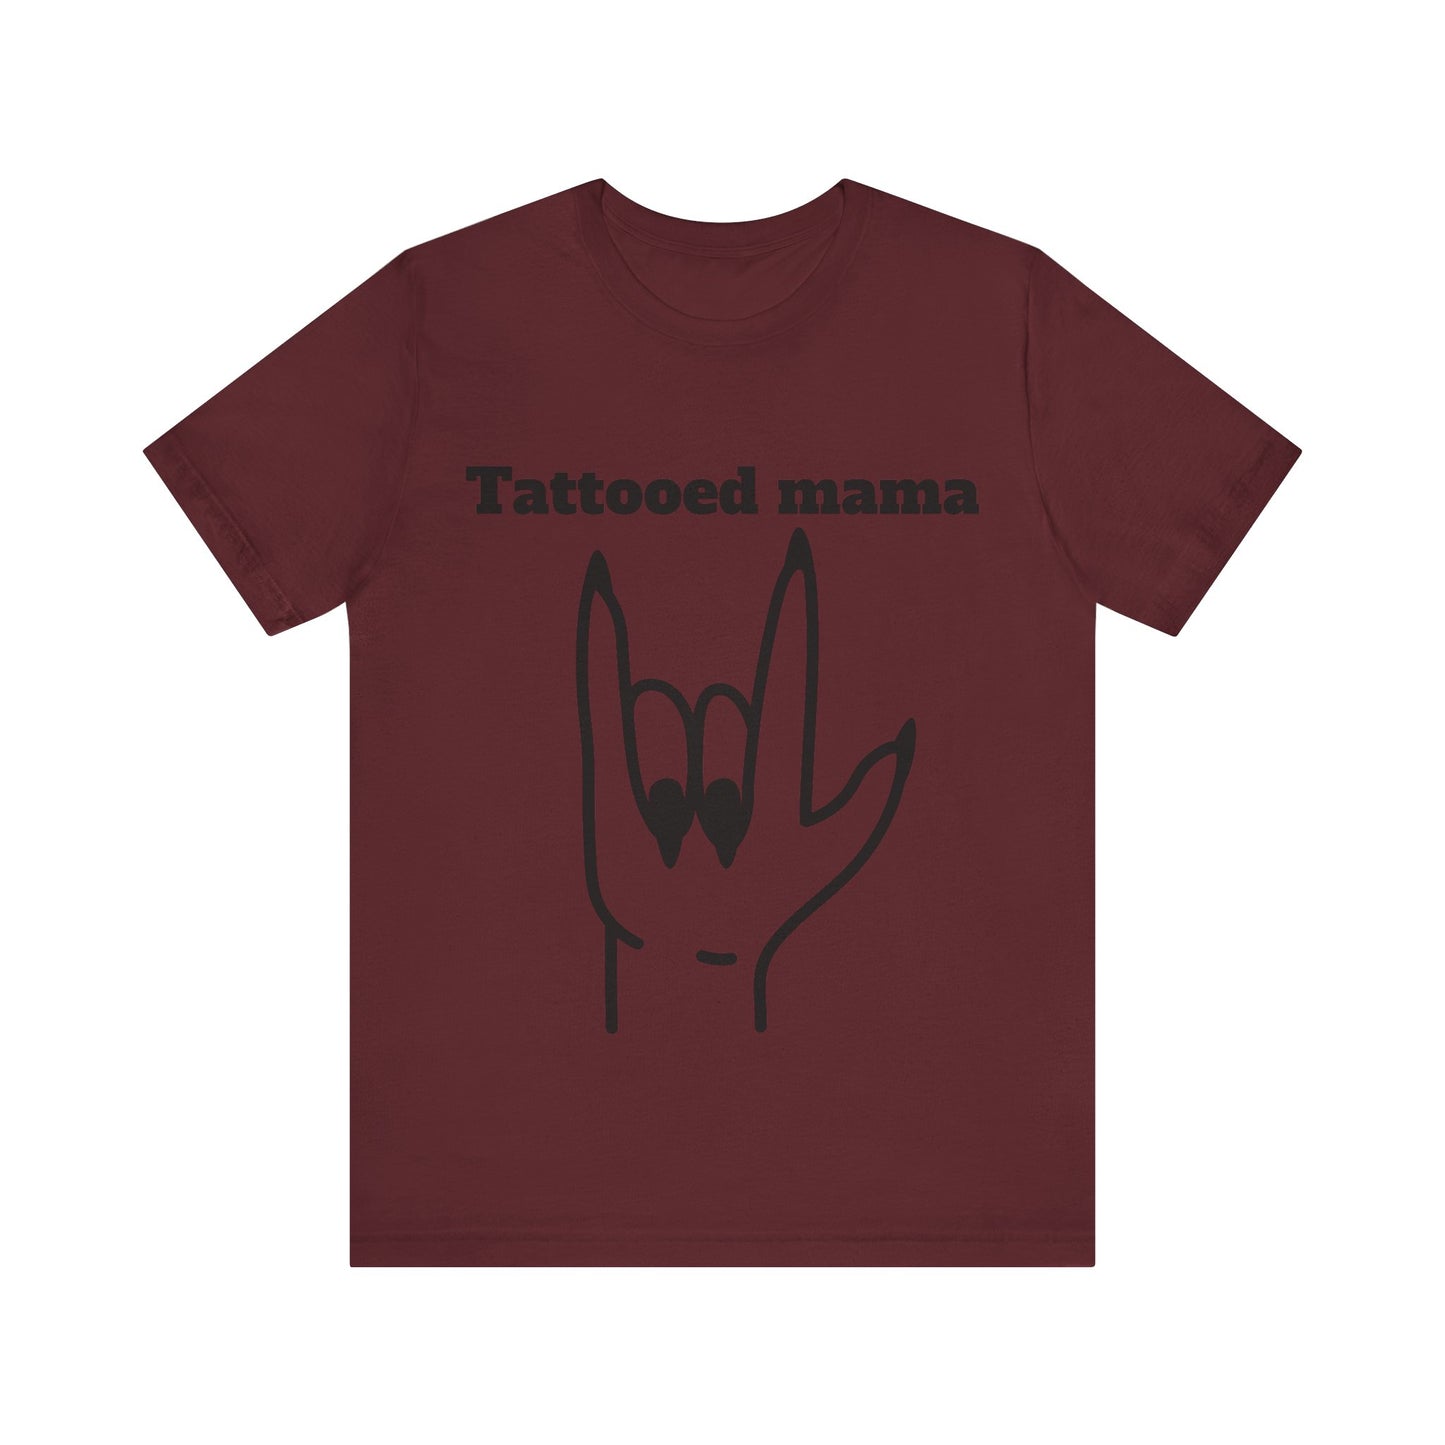 "Tattooed mama" Short Sleeve Tee